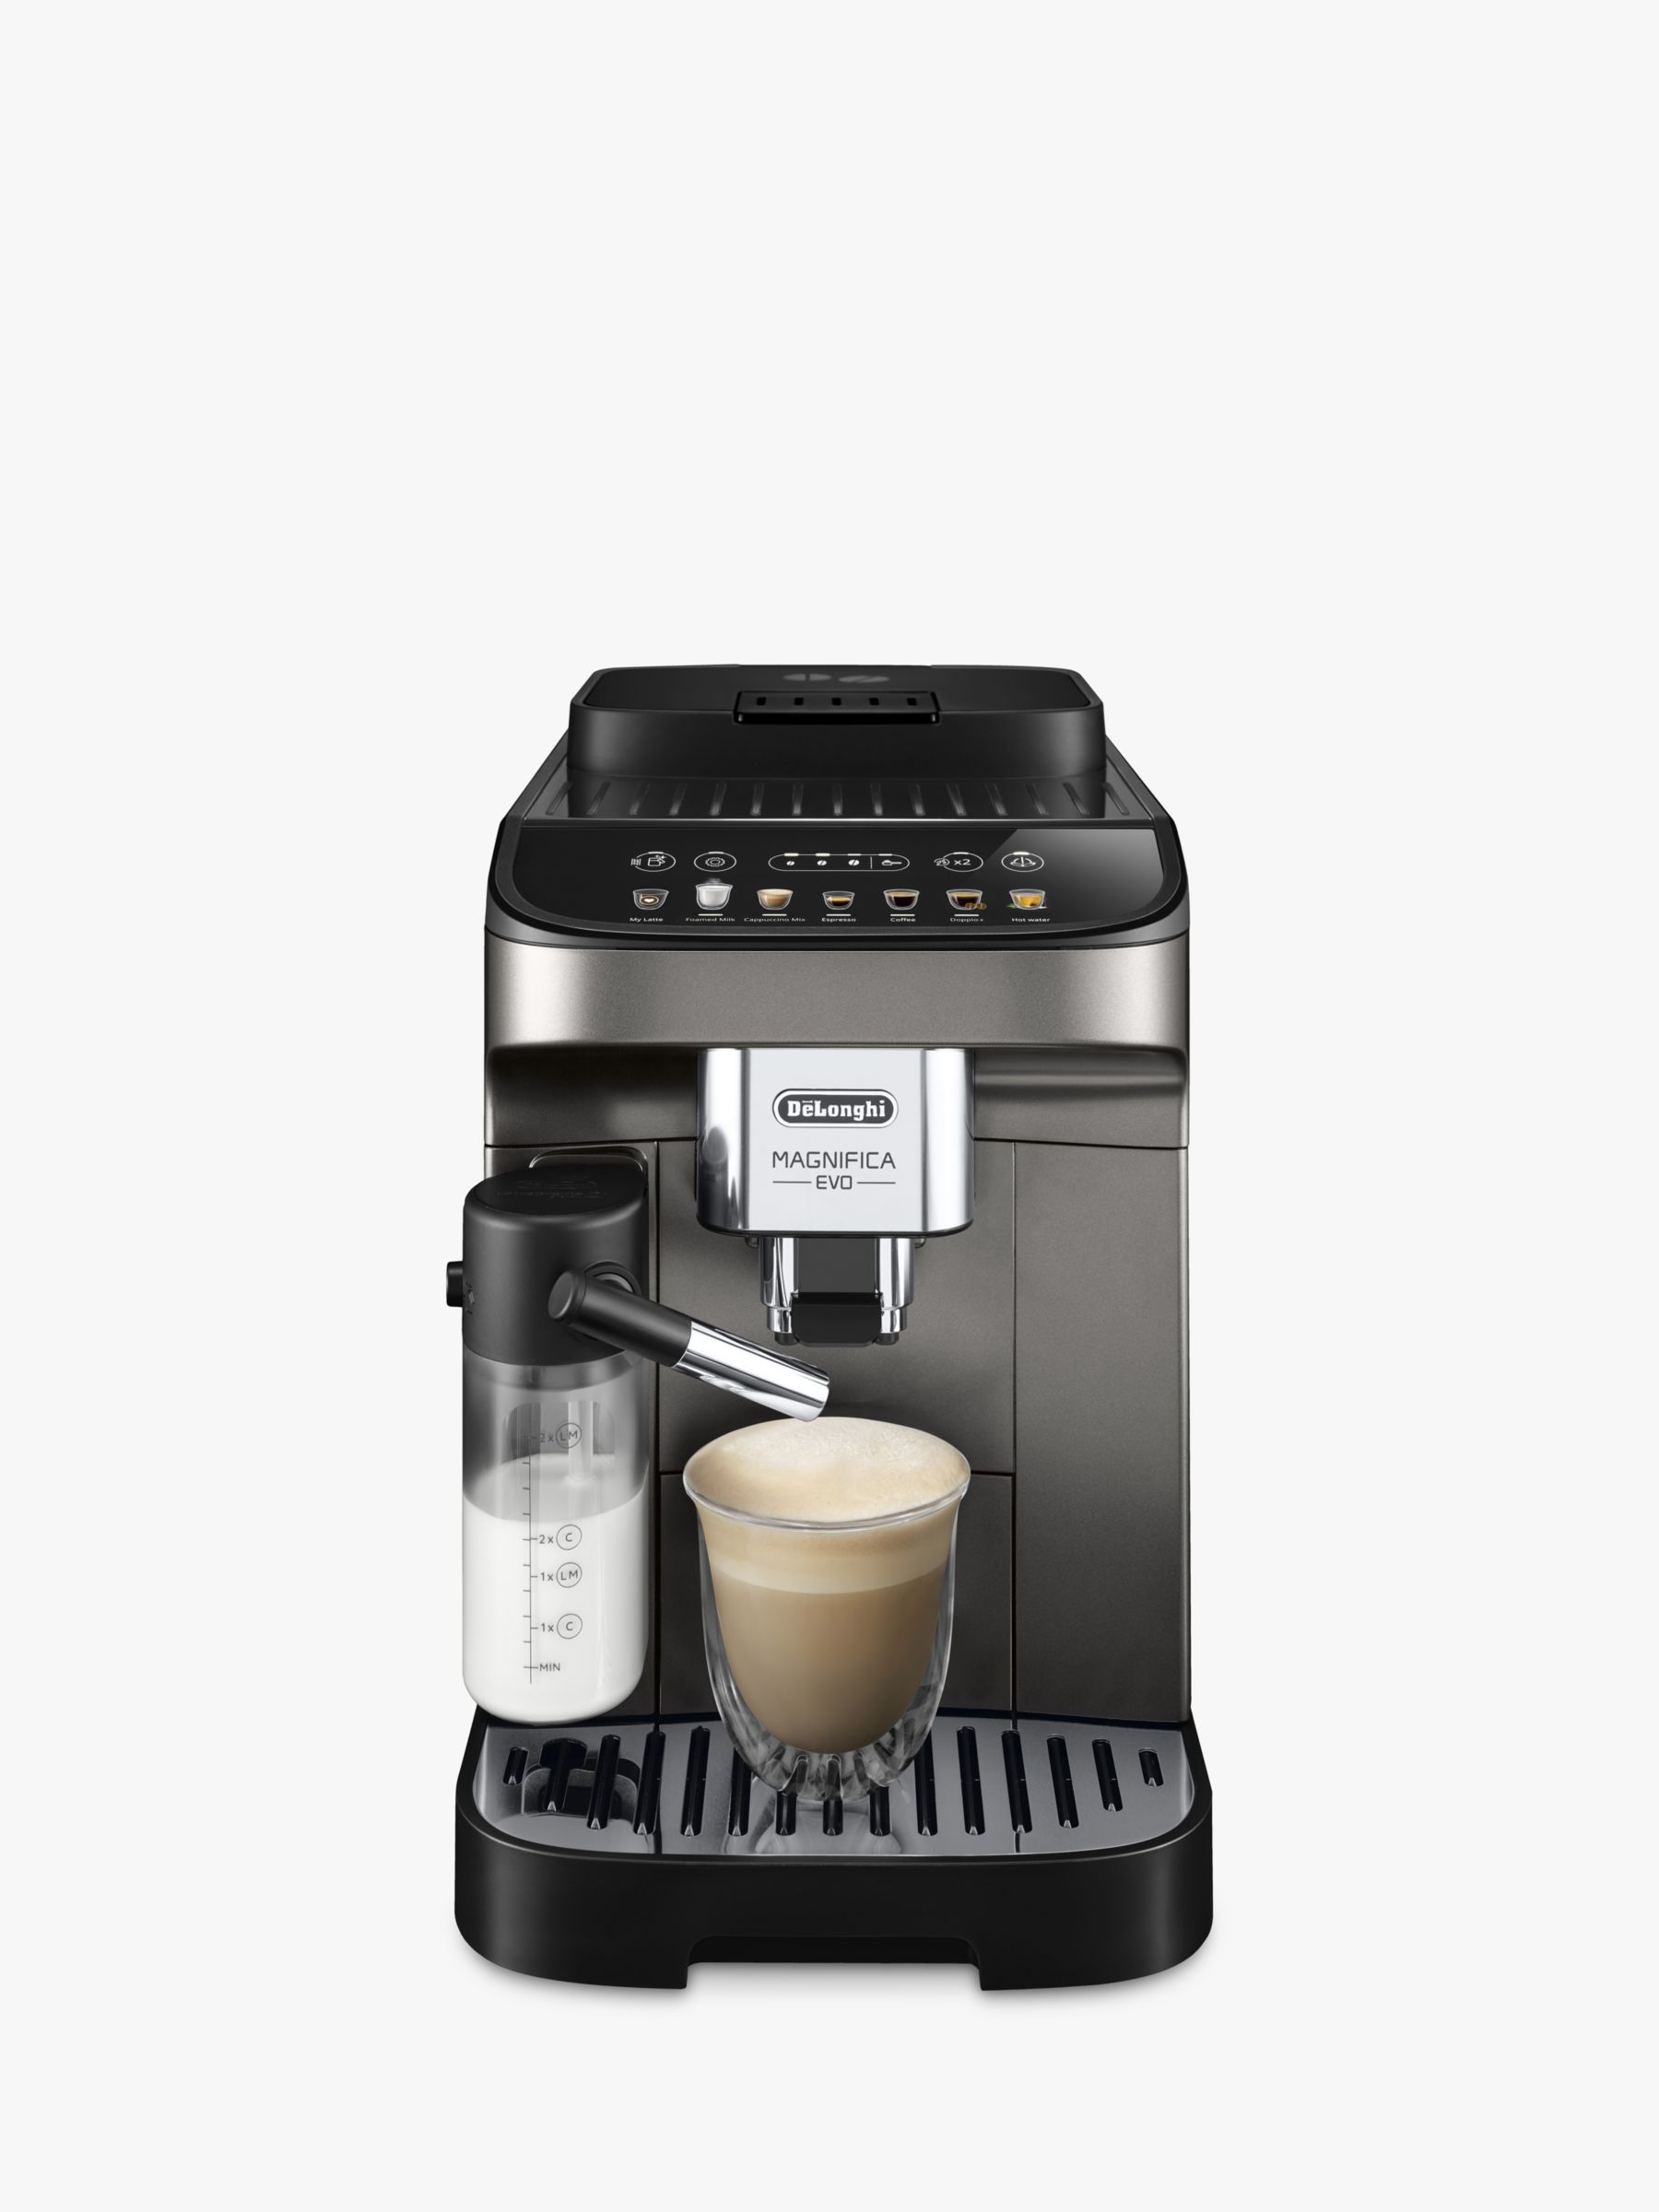 Magnifica Evo  How to descale your coffee machine 